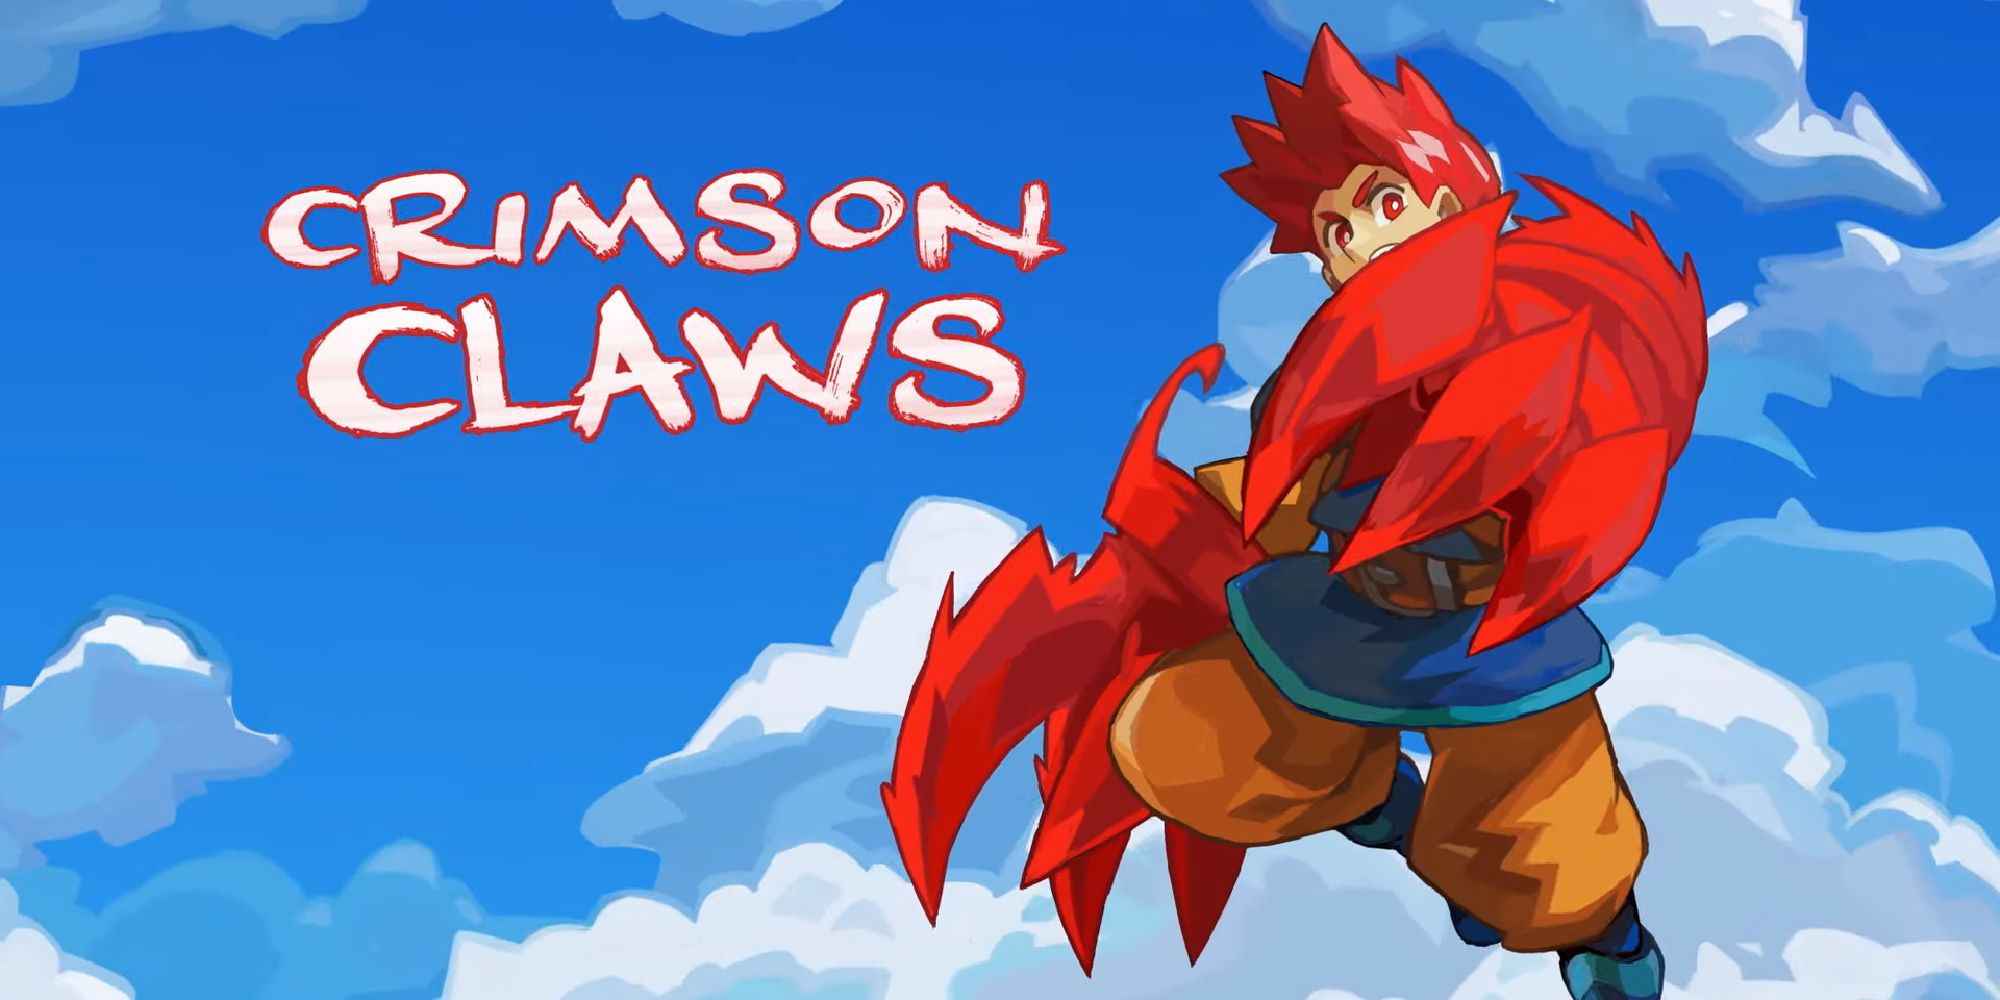 Flynn Son Of Crimson -The Crimson Claws Splash Art From The Weapons Trailer